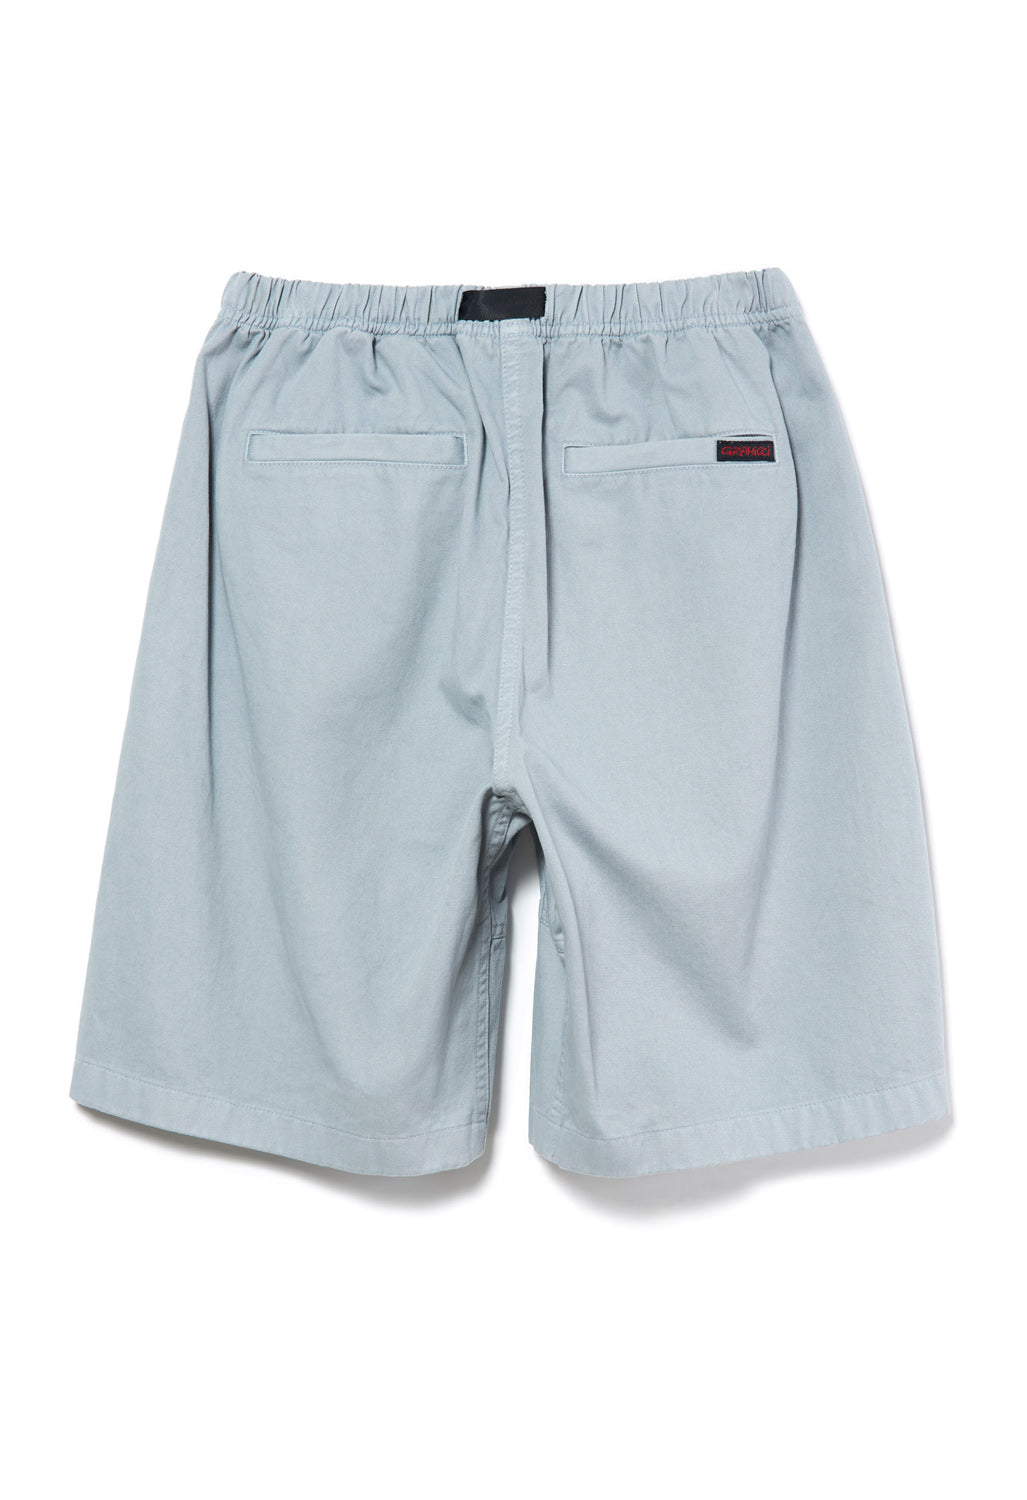 Gramicci Men's G Shorts - Smoky Blue